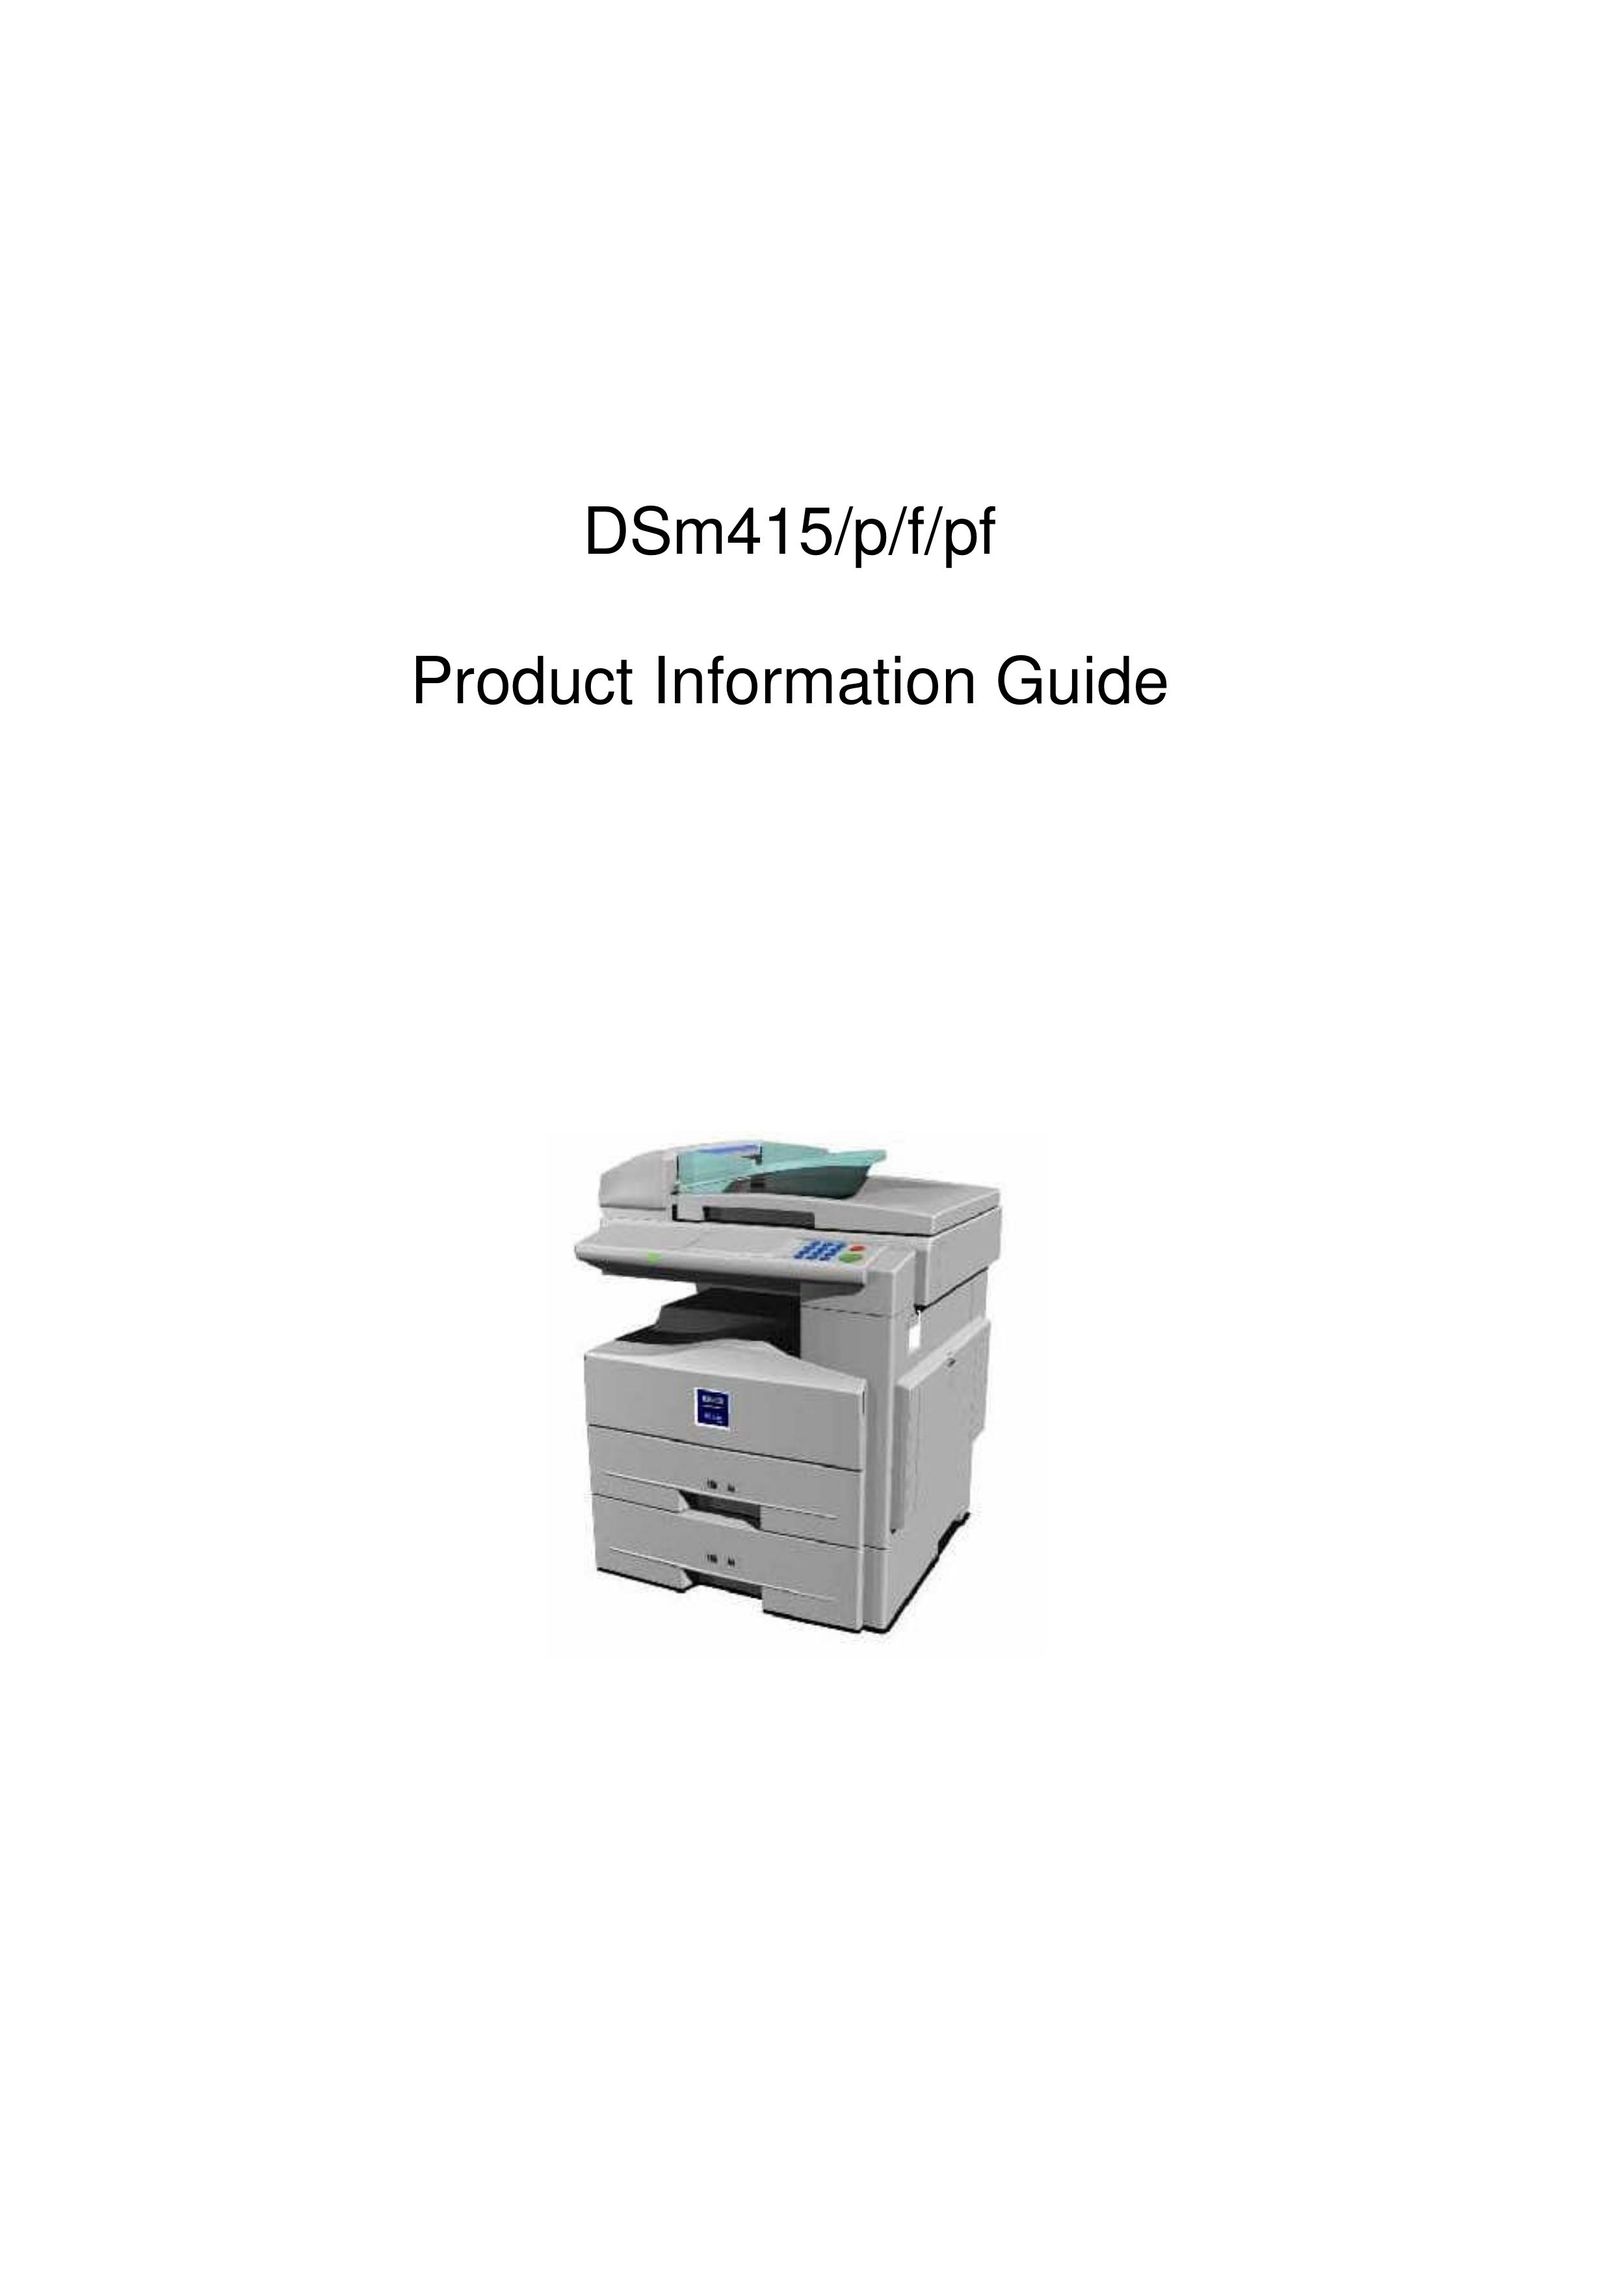 3Com DSm415 Printer User Manual (Page 1)